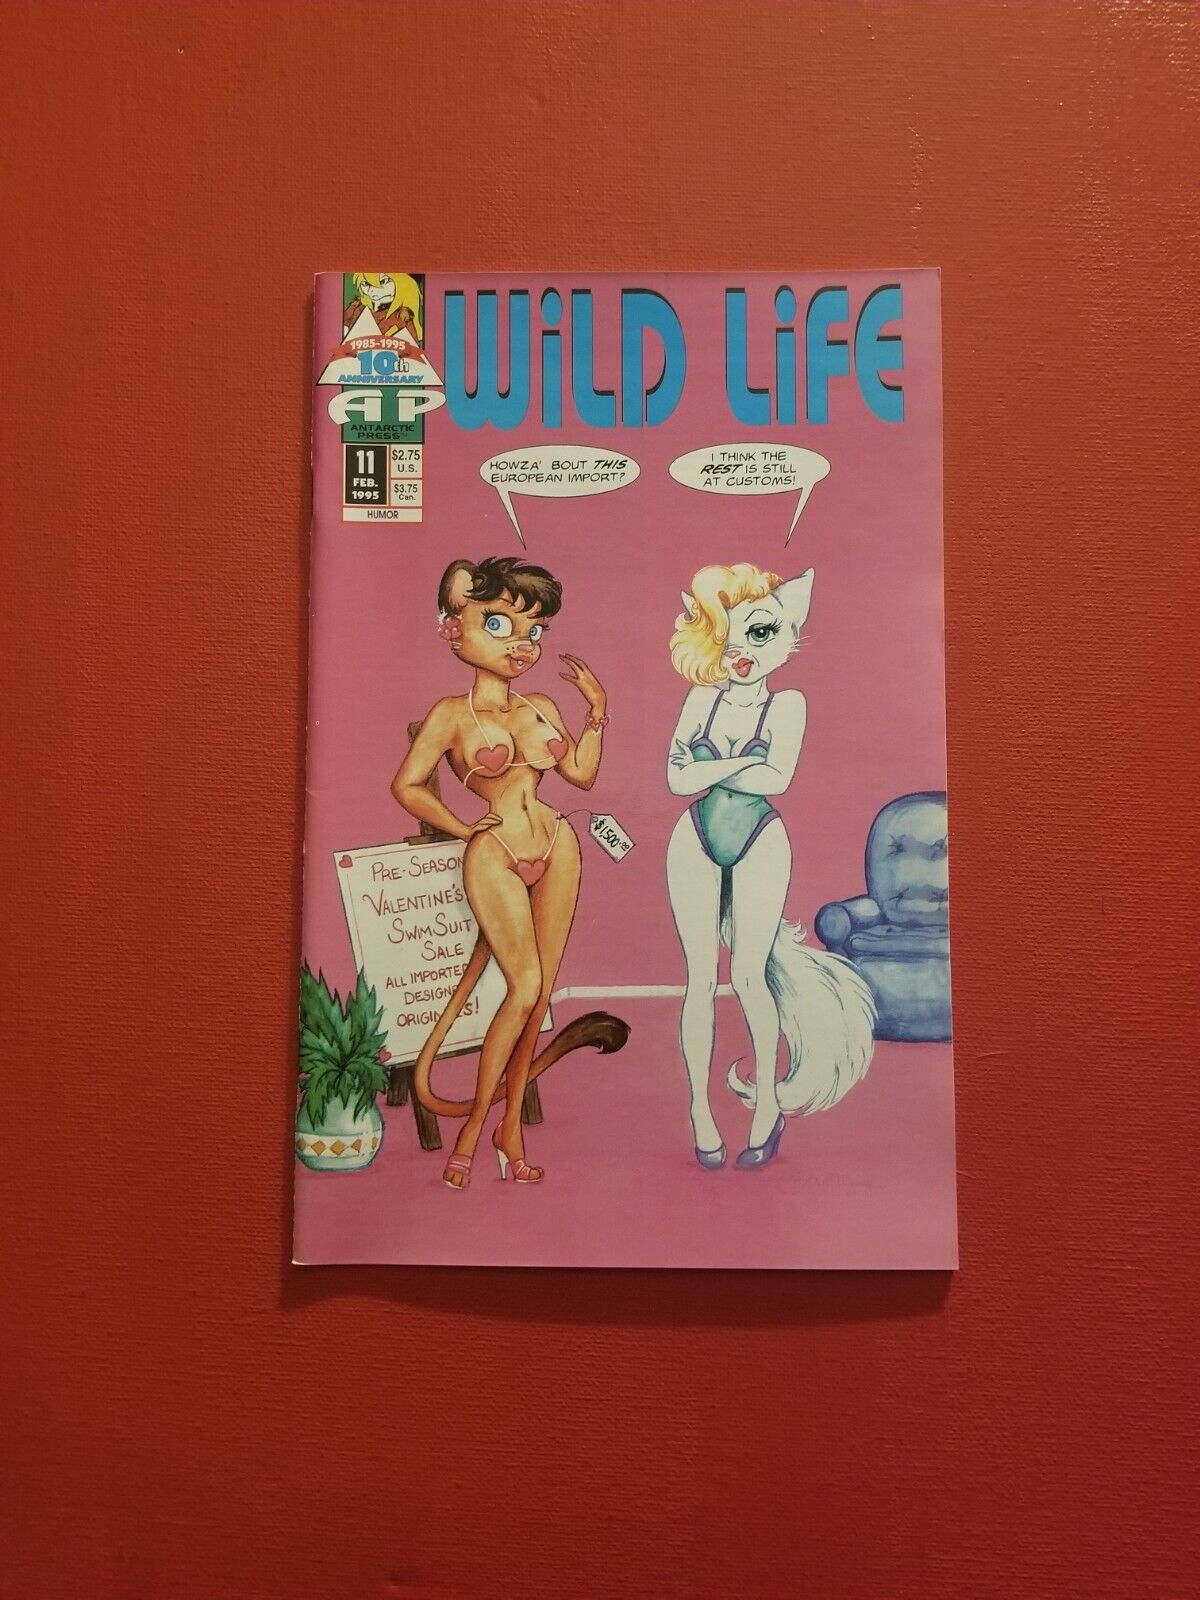 ANTARTIC PRESS - WILD LIFE #11 COMIC BOOK - 1995 - VERY FINE CONDITION